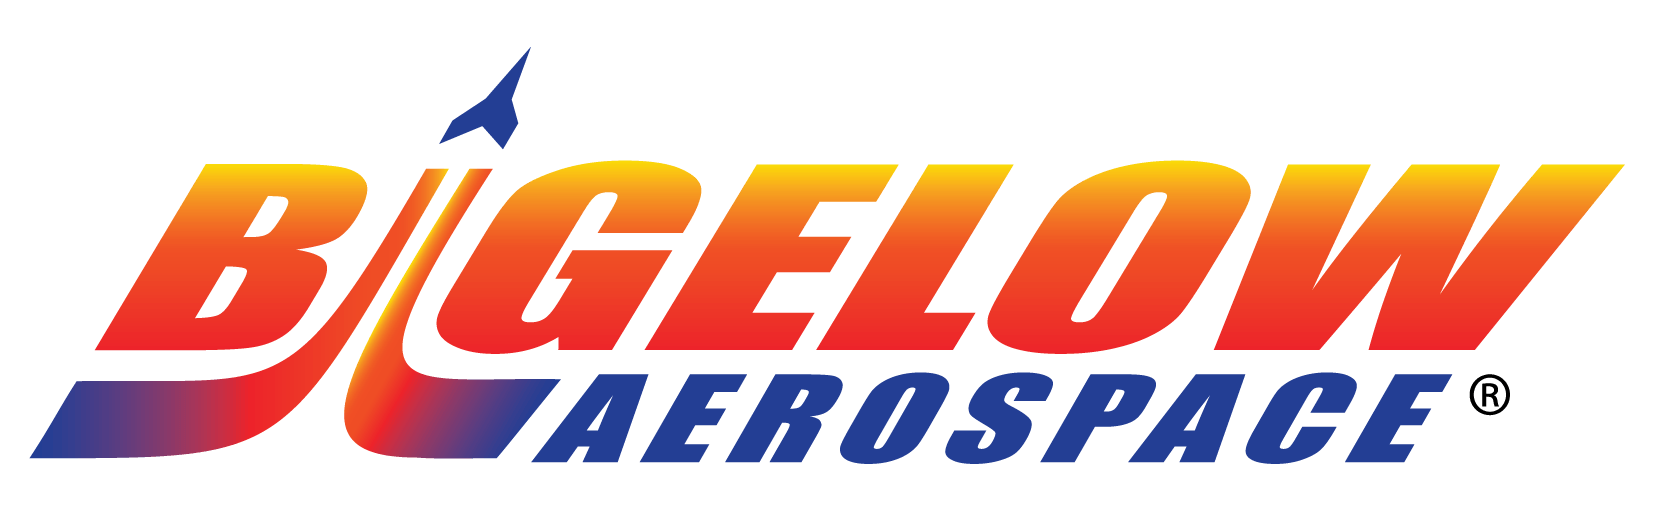 American Aero Corp Logo - Bigelow Aerospace